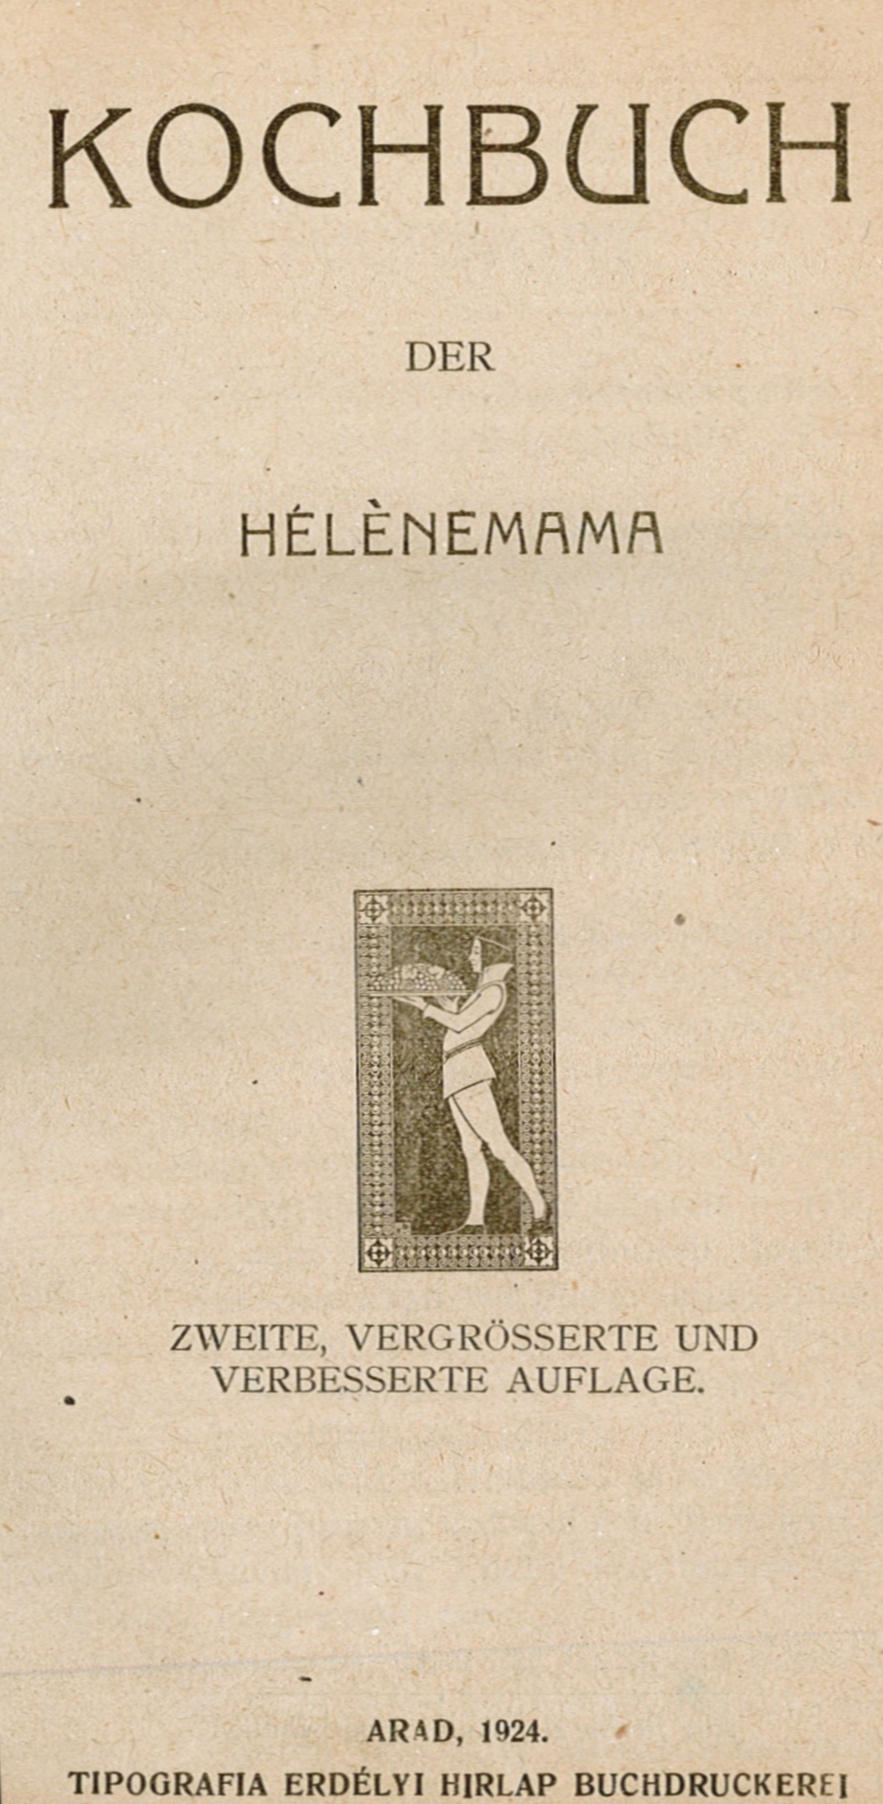 Kochbuch der Hélènemama